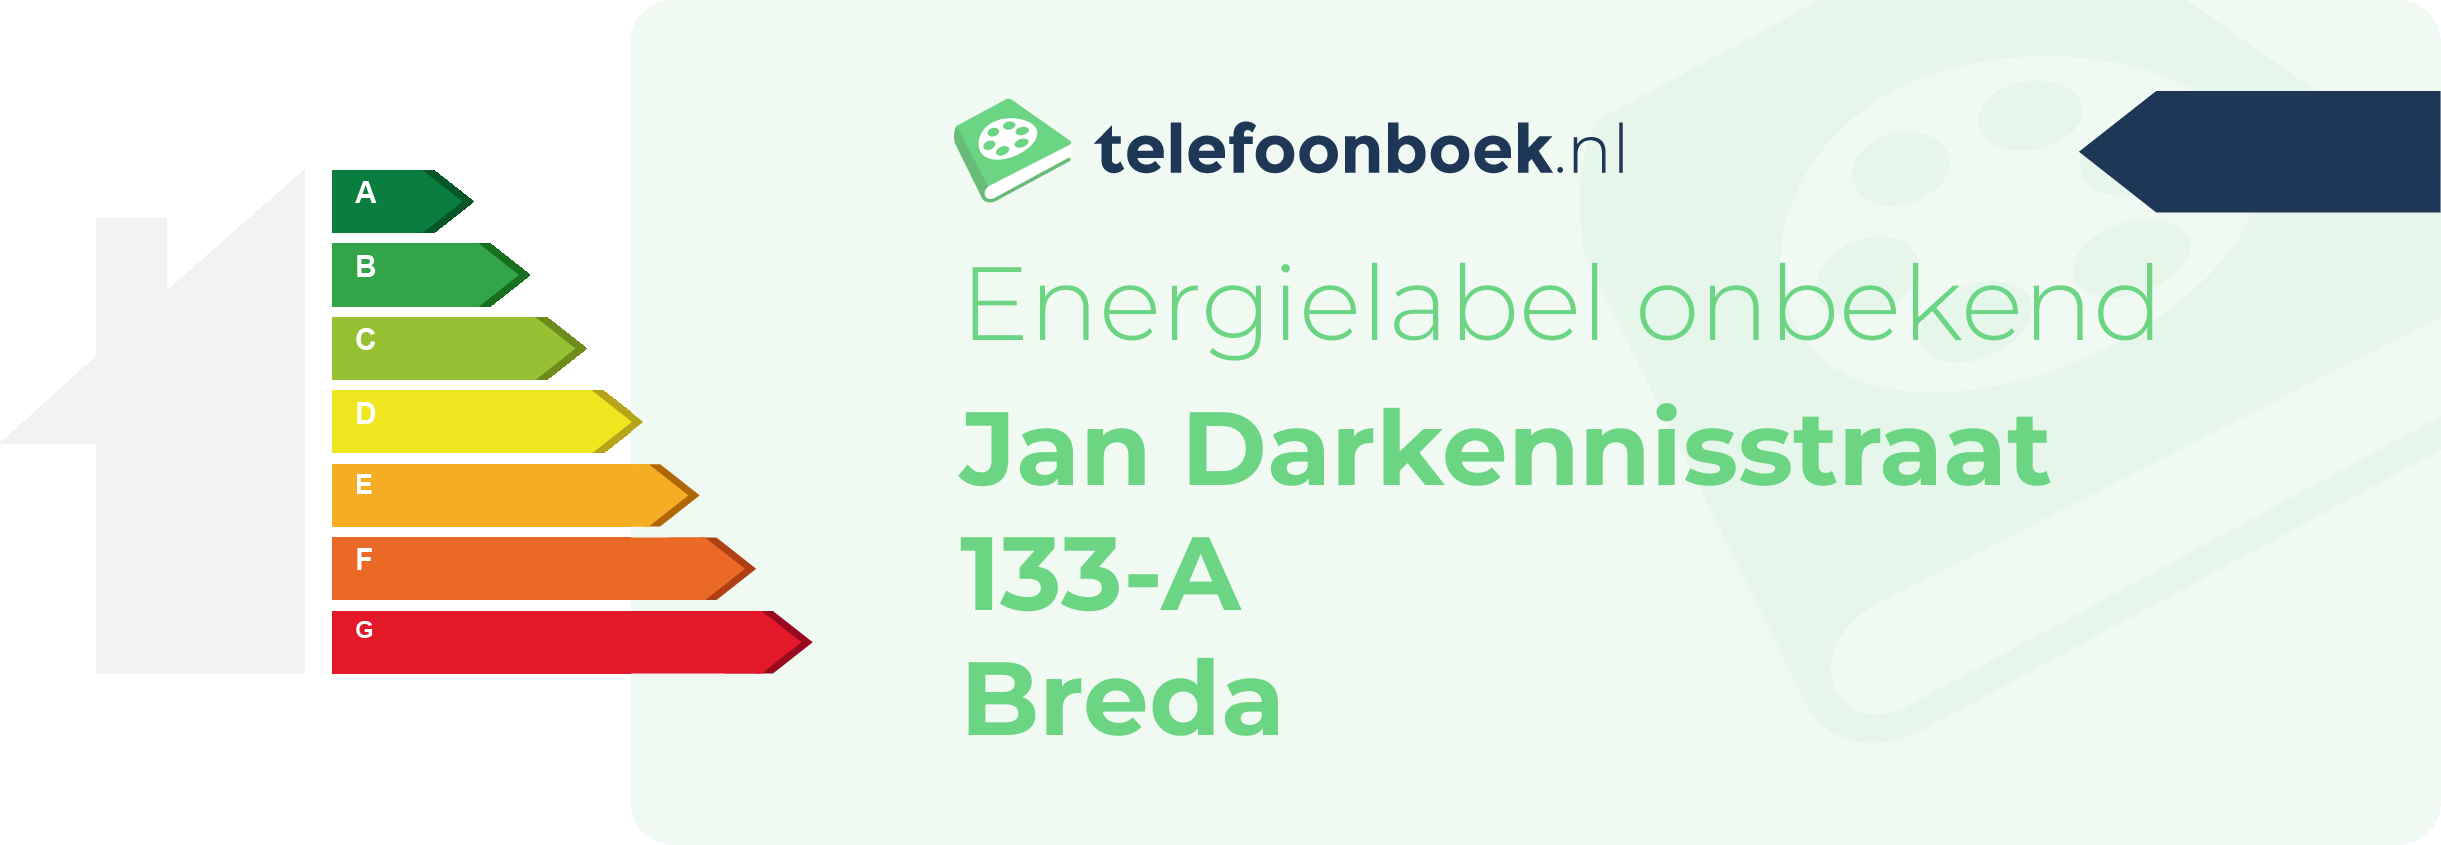 Energielabel Jan Darkennisstraat 133-A Breda